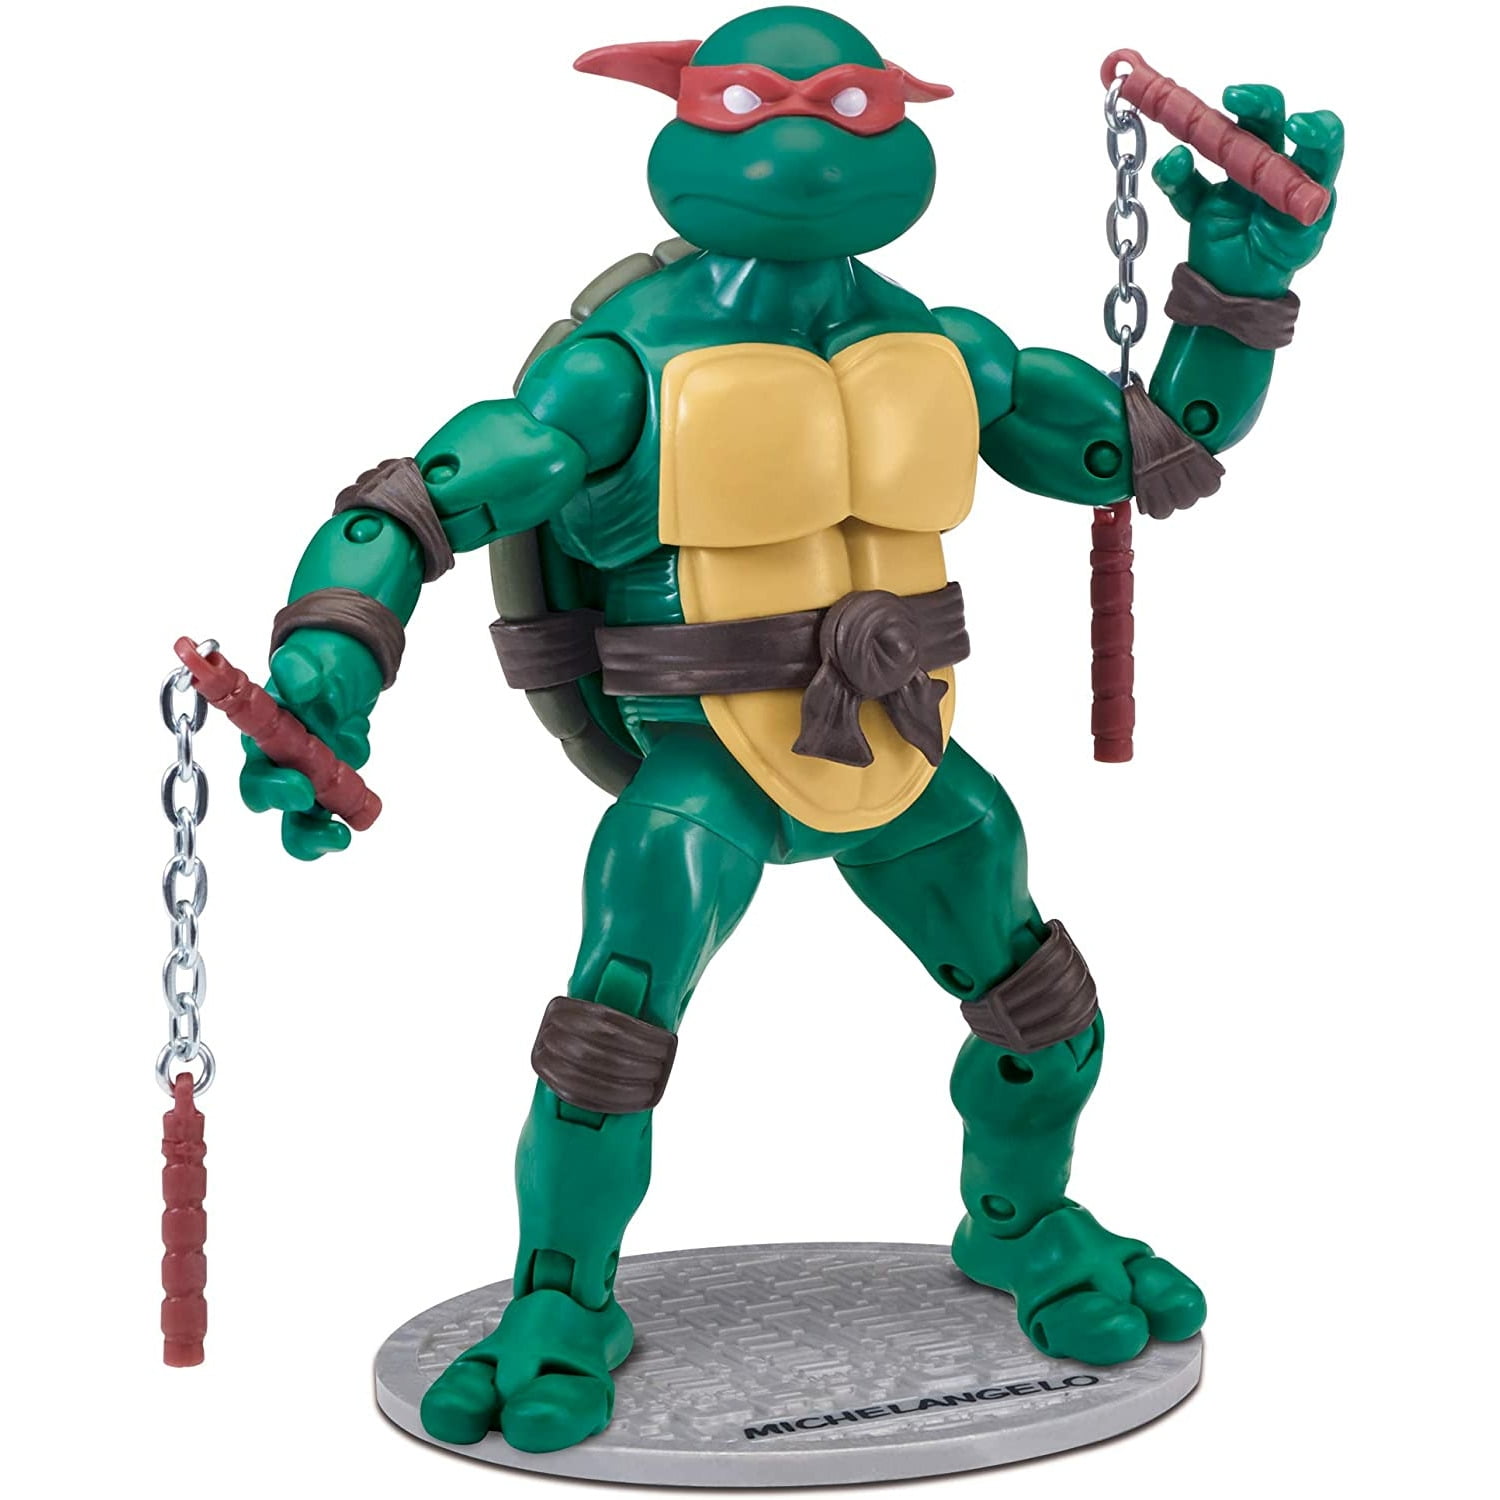 Playmates Toys Teenage Mutant Ninja Turtles Michaelangelo Action Figure for sale online